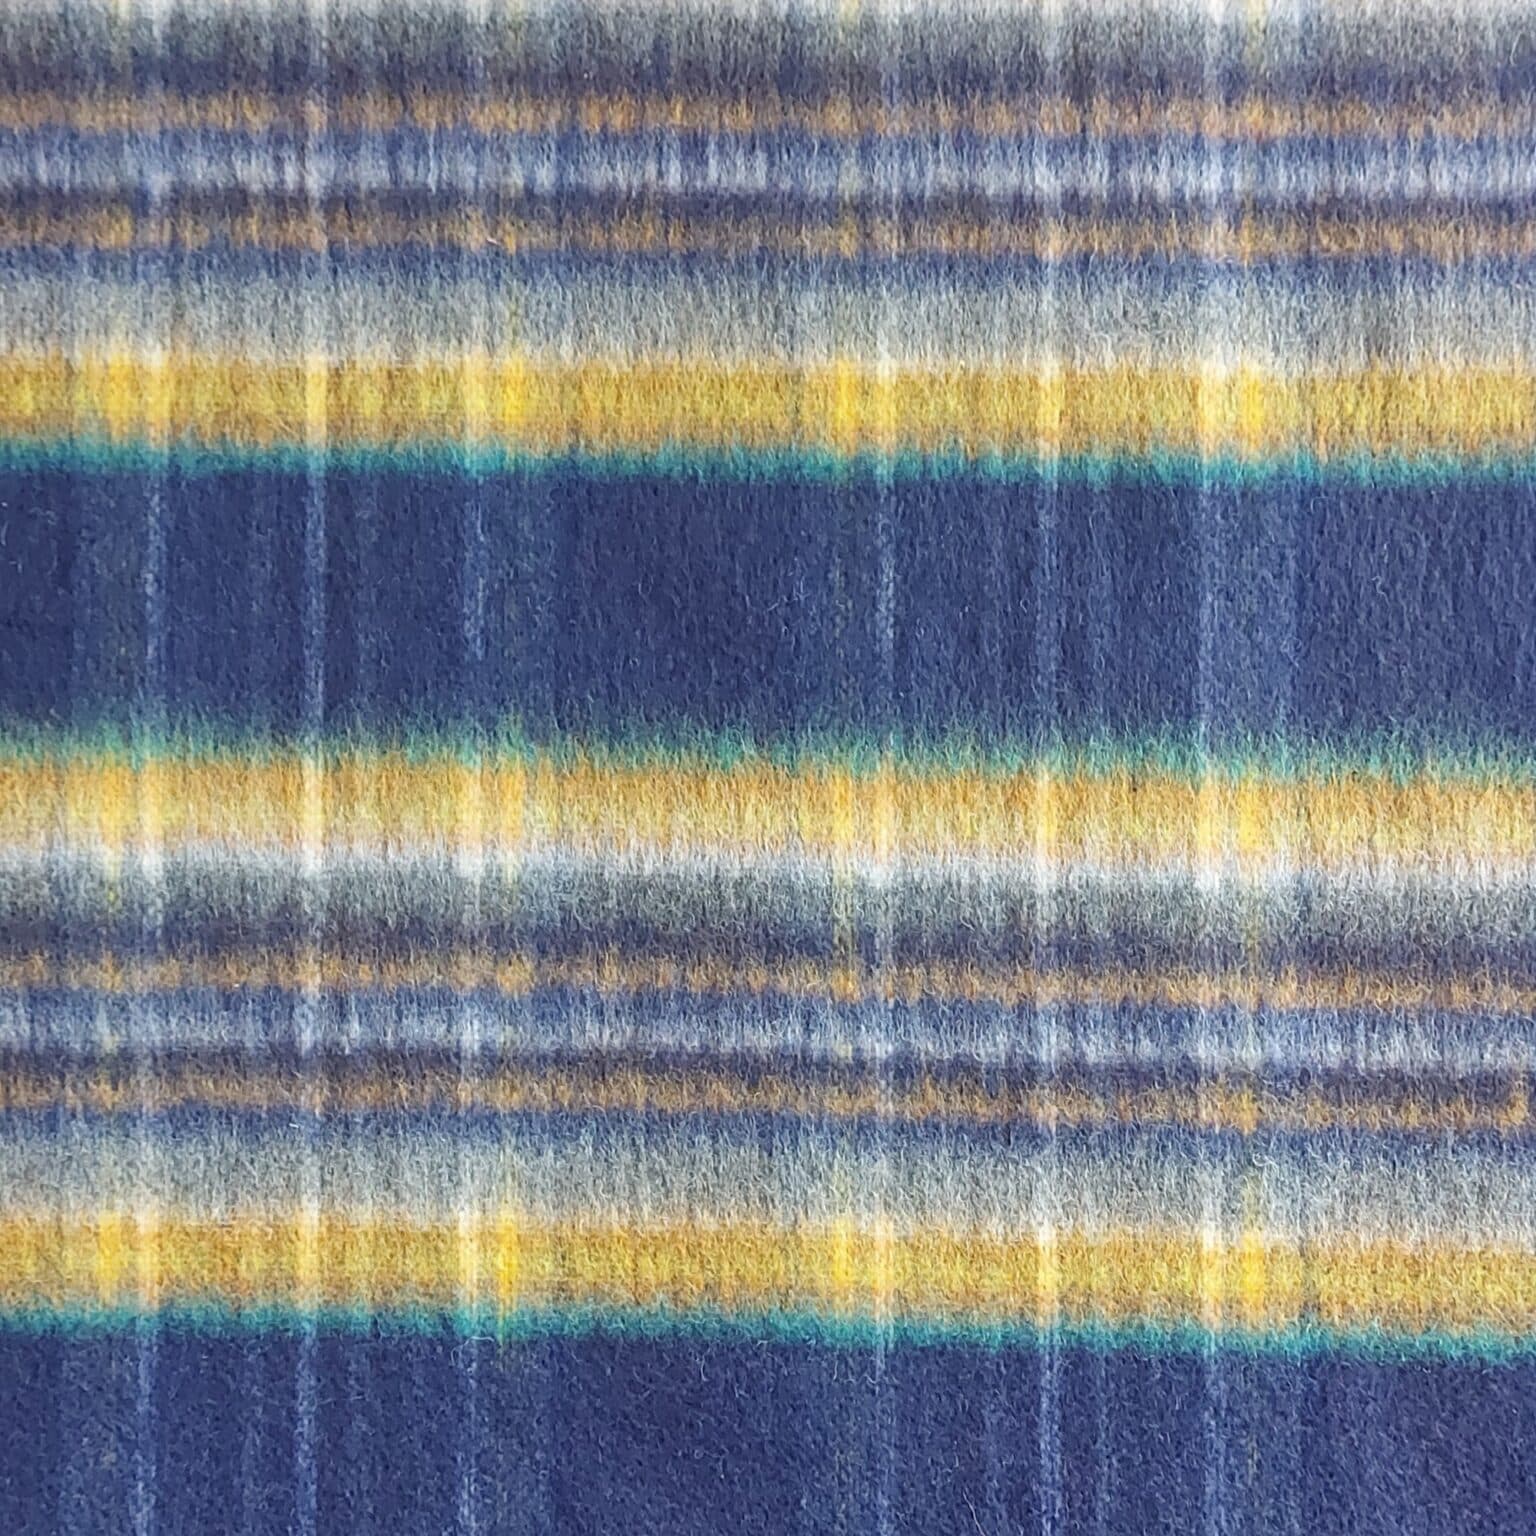 sunset stripe wool mix fabric | More Sewing